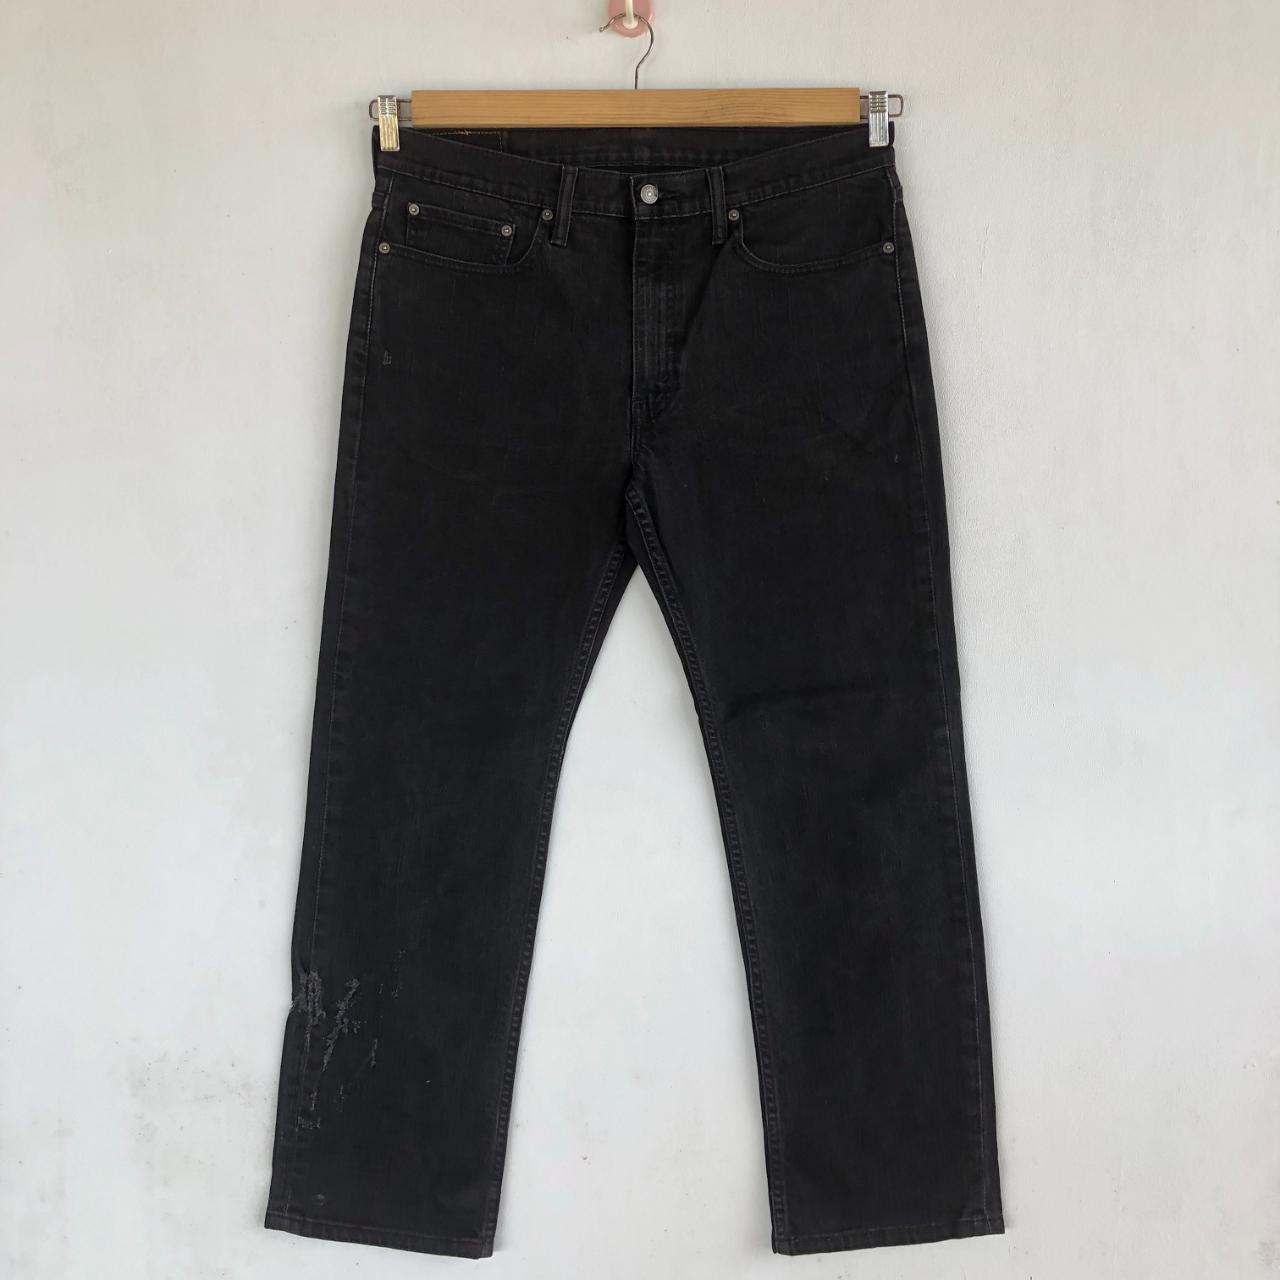 Vintage Levis 514 Jeans Slim Straight Levis 514... - Depop